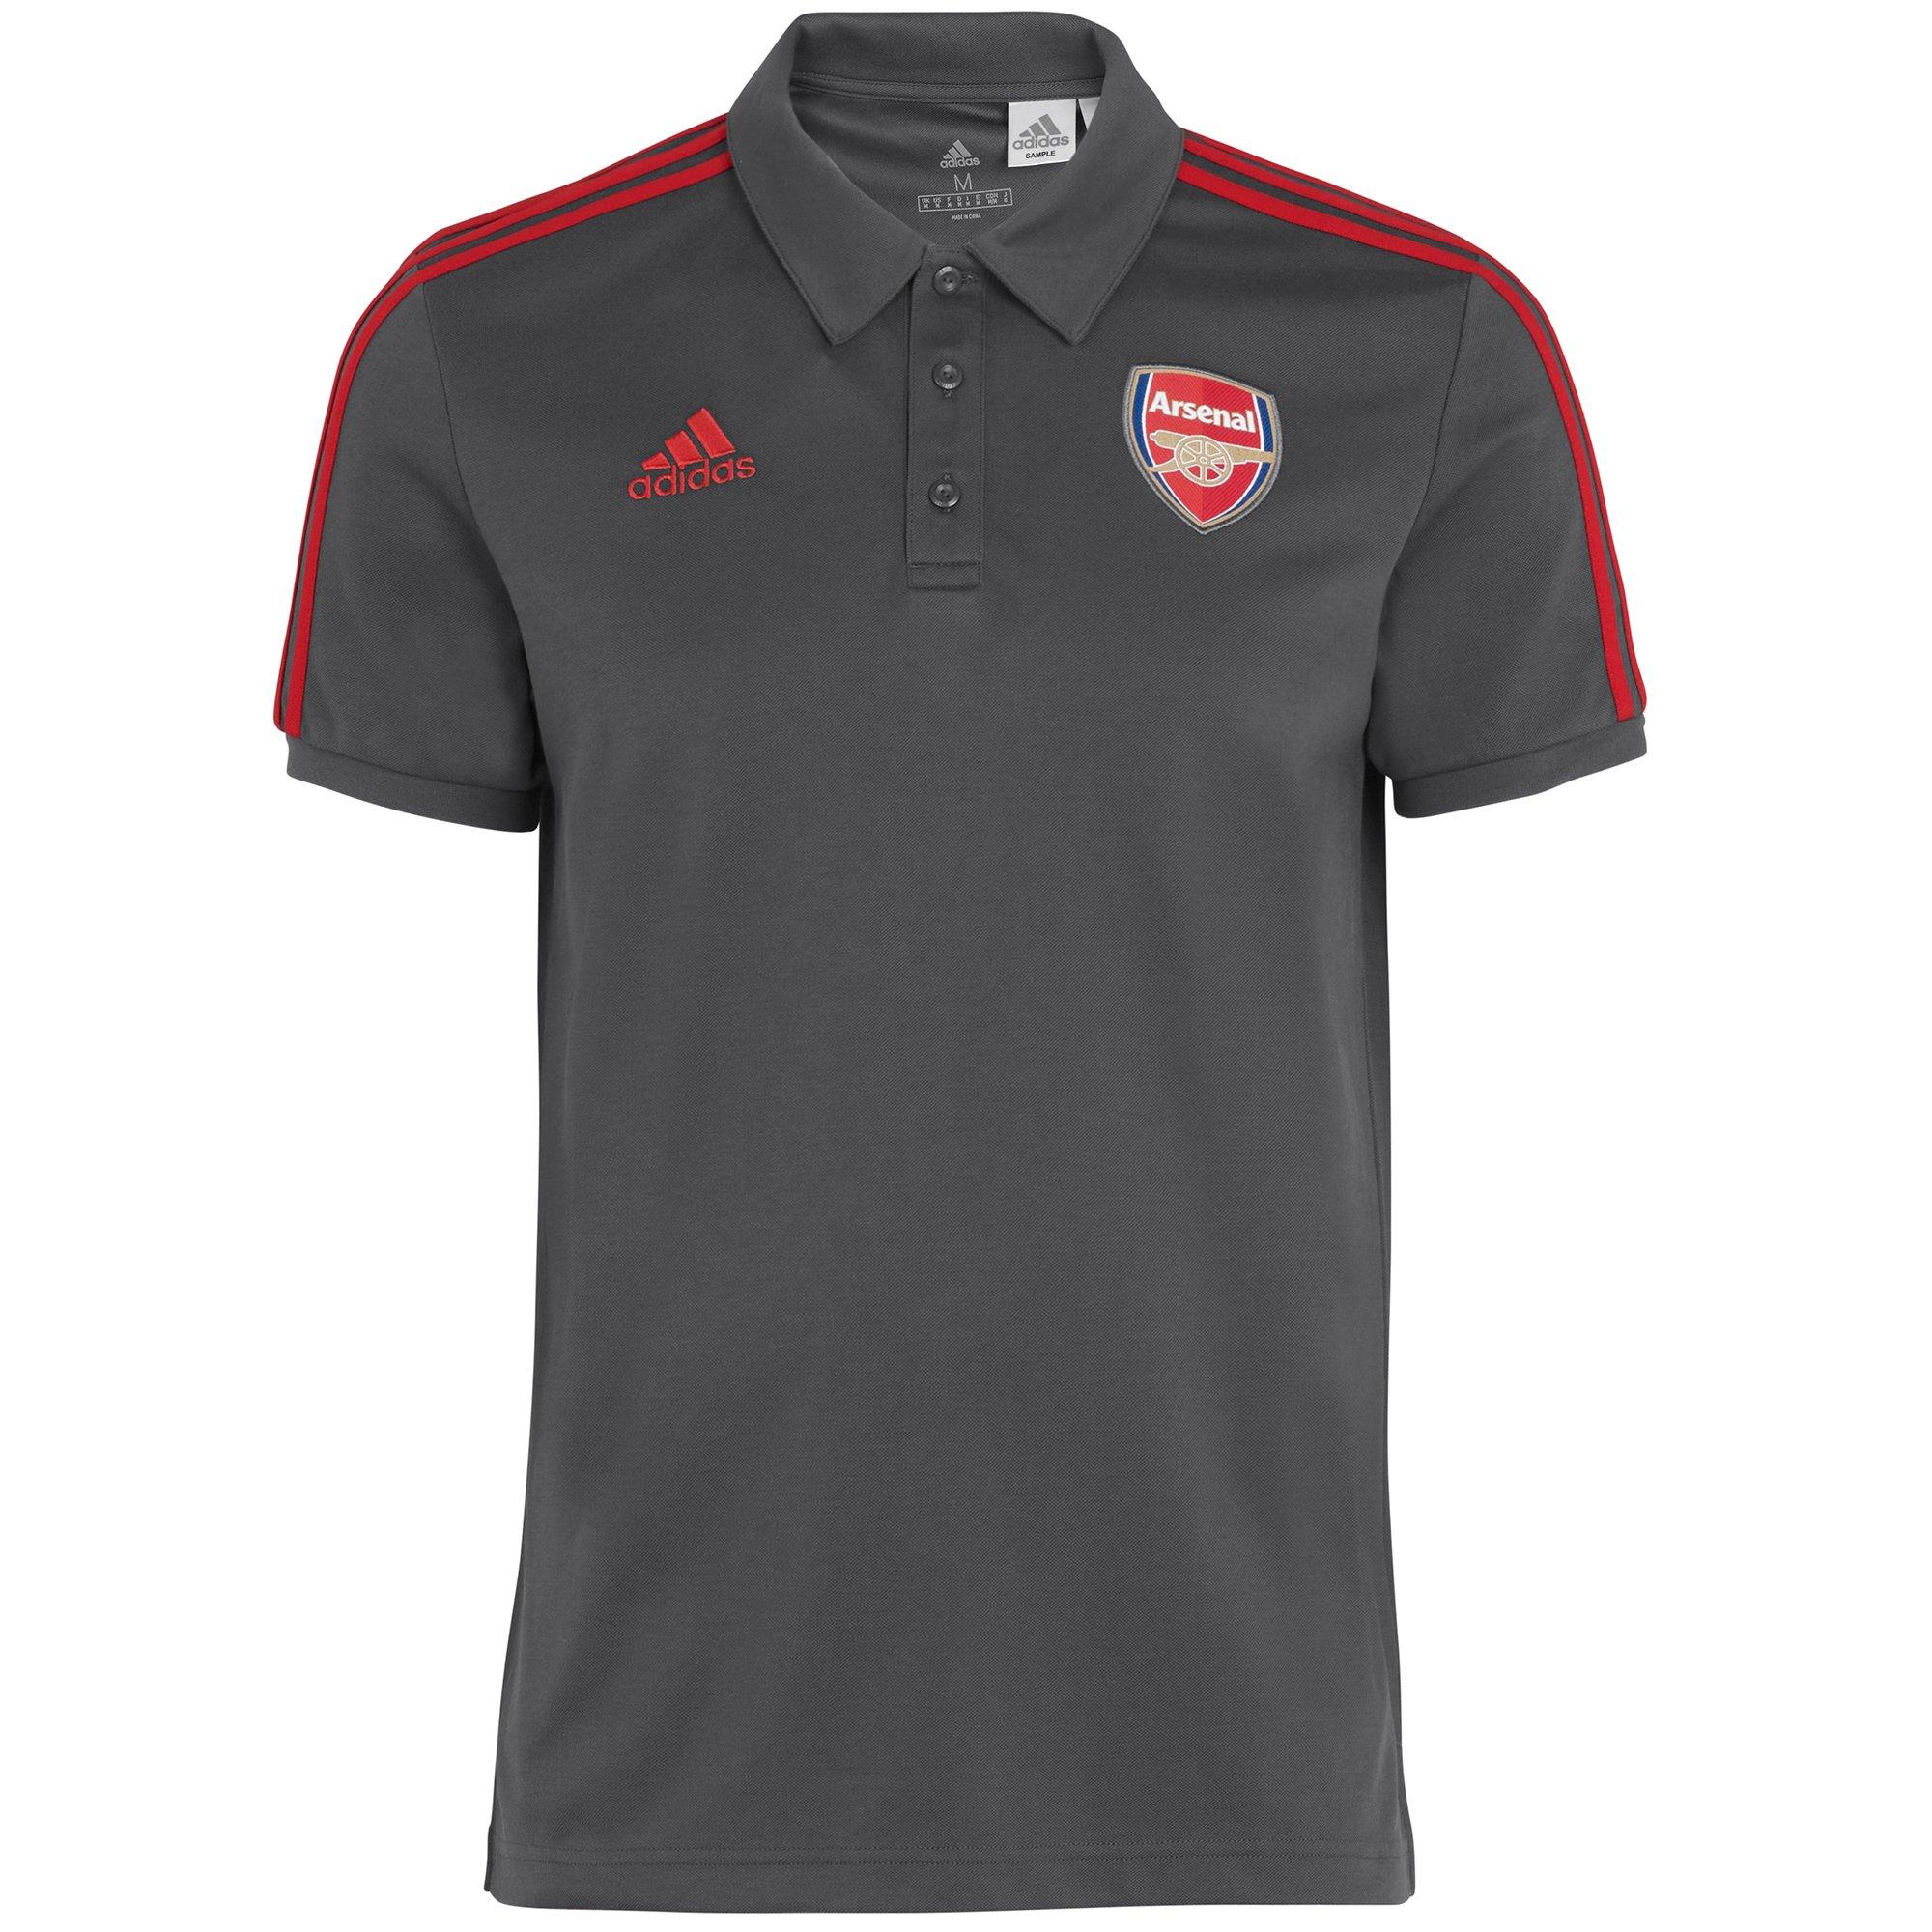 Arsenal 20/21 ID 3 Stripe Polo Shirt 